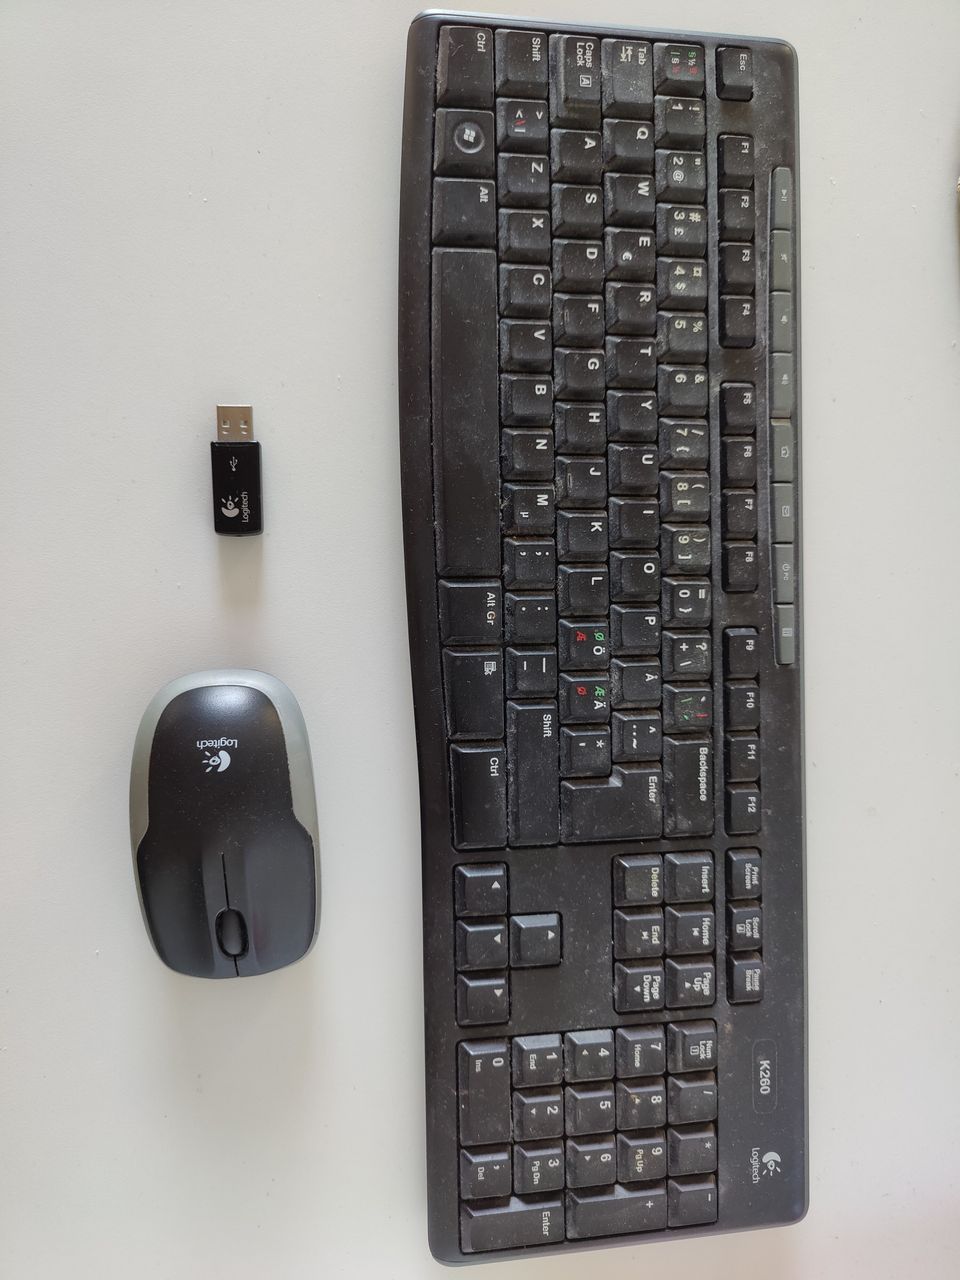 Wireless keyboard + mouse set